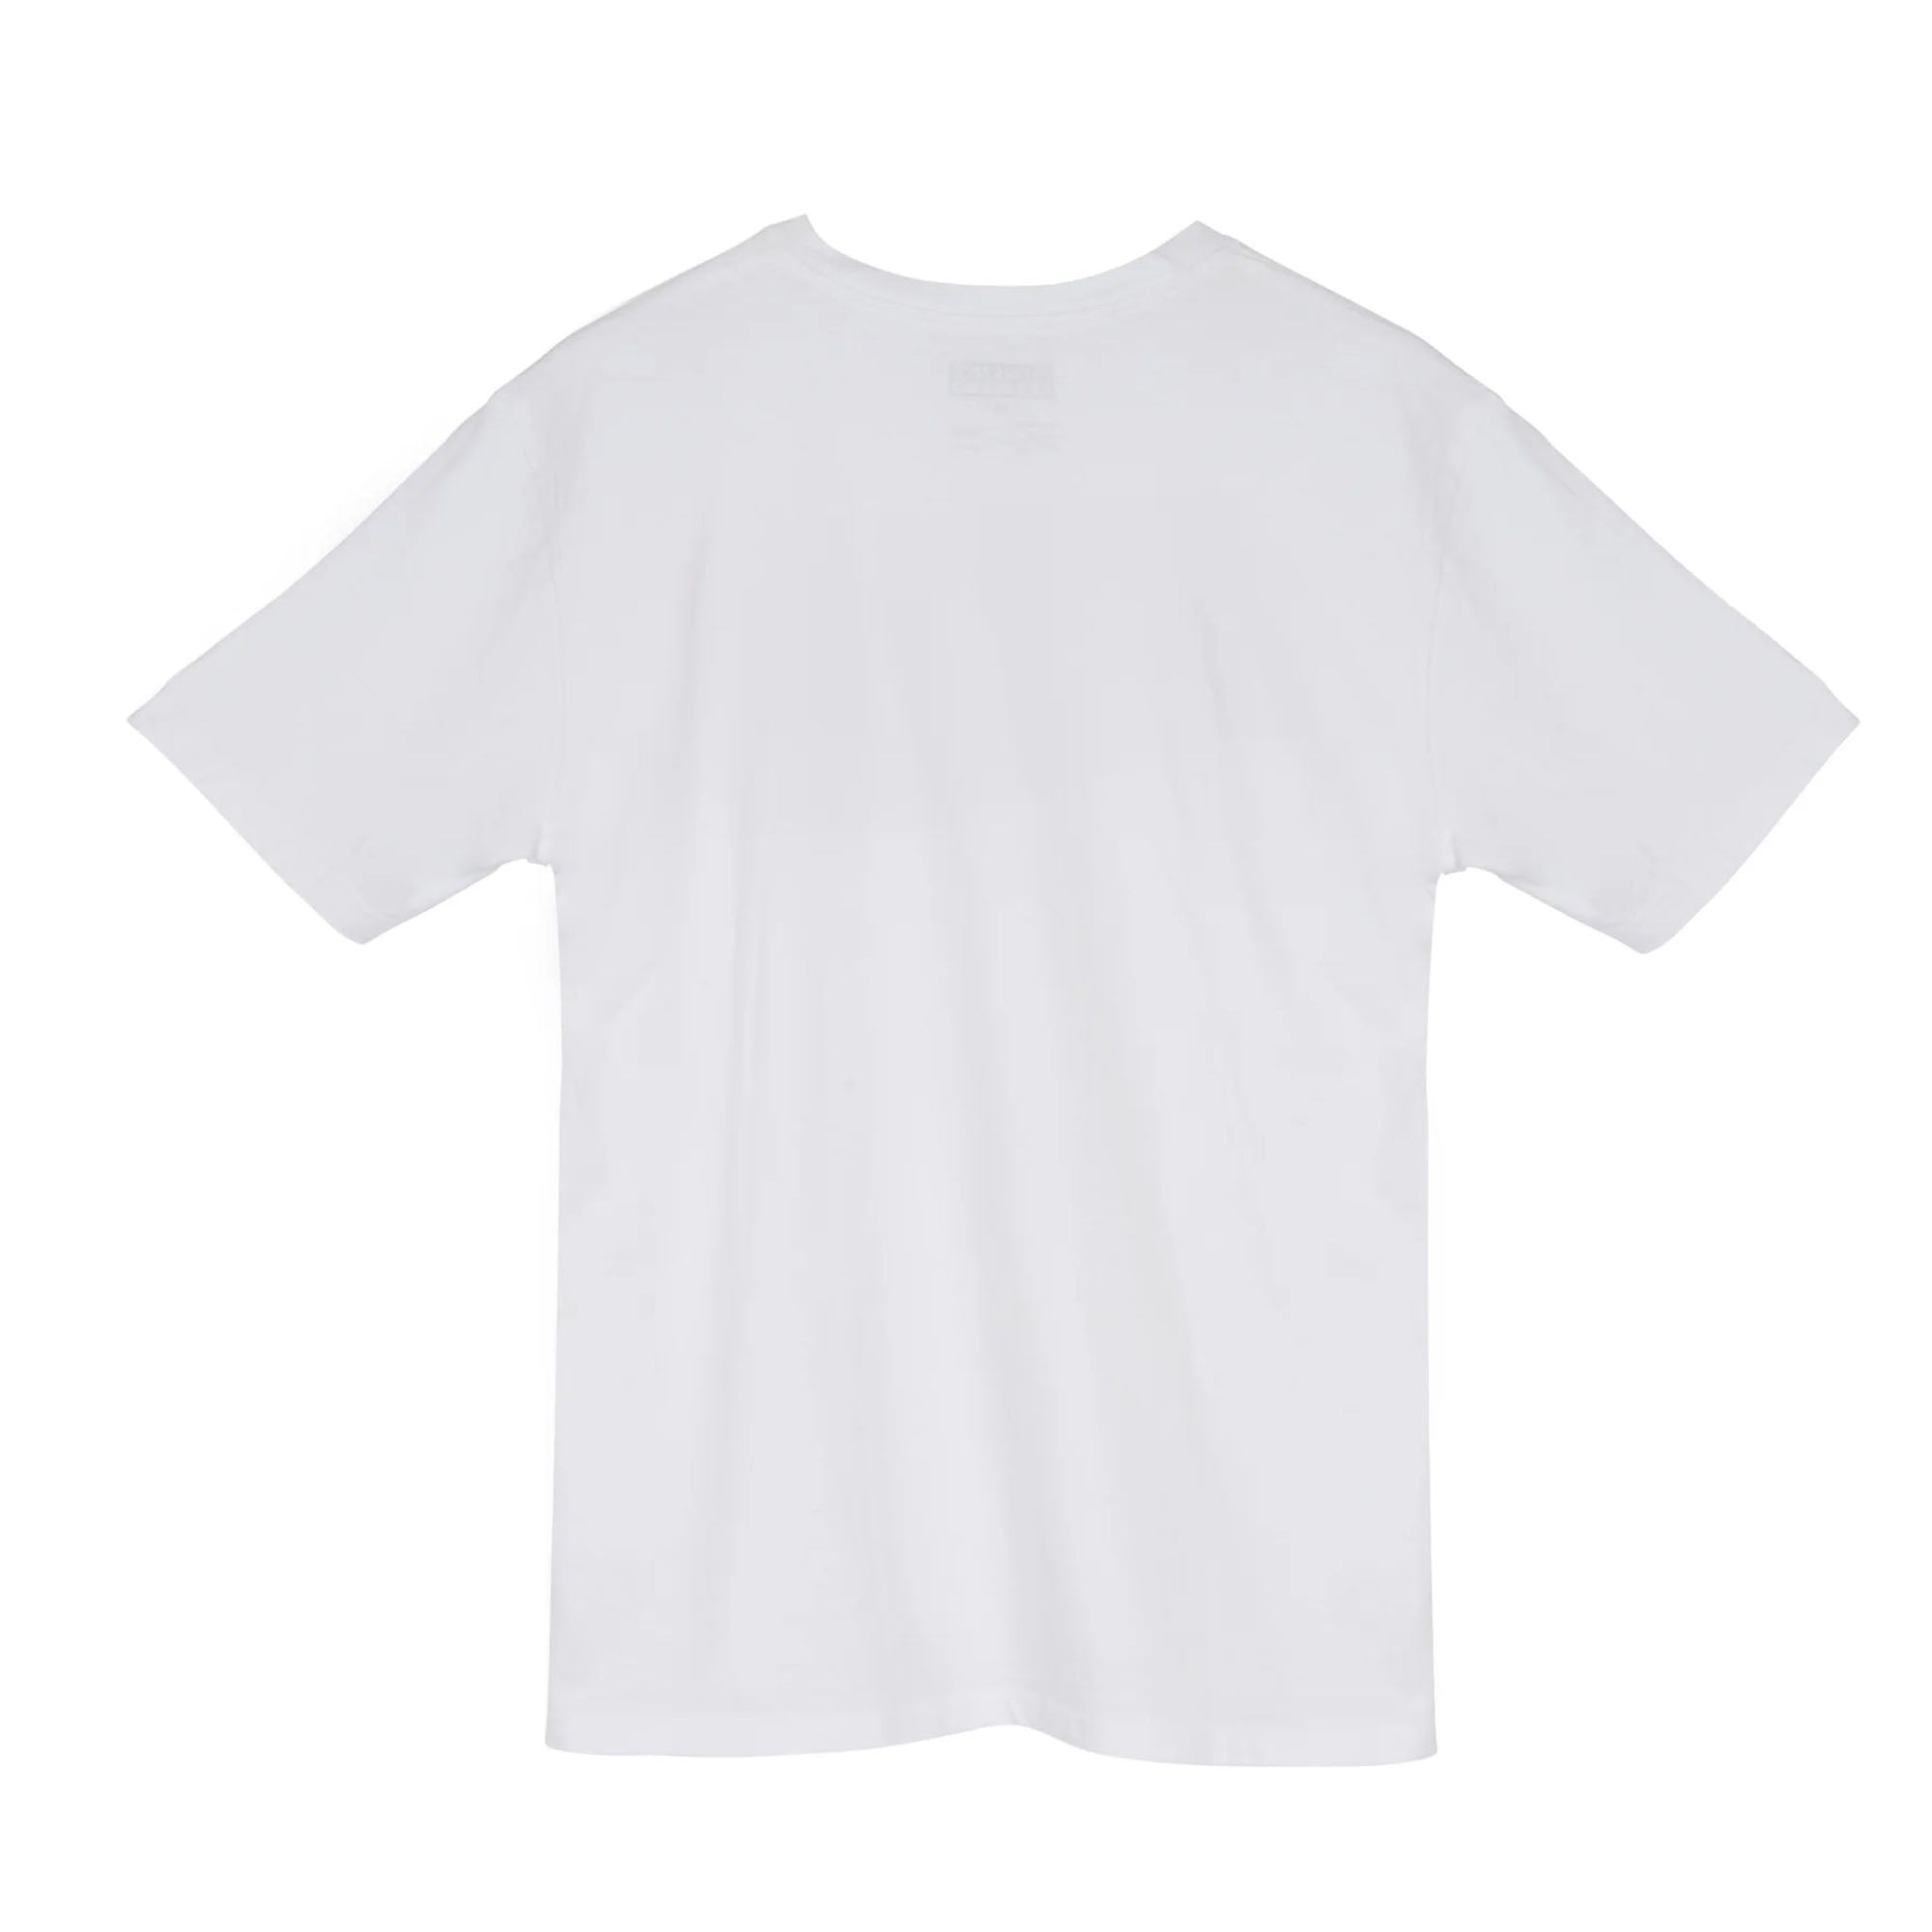 Florence Marine X Logo Island Chain Men's S/S T-Shirt